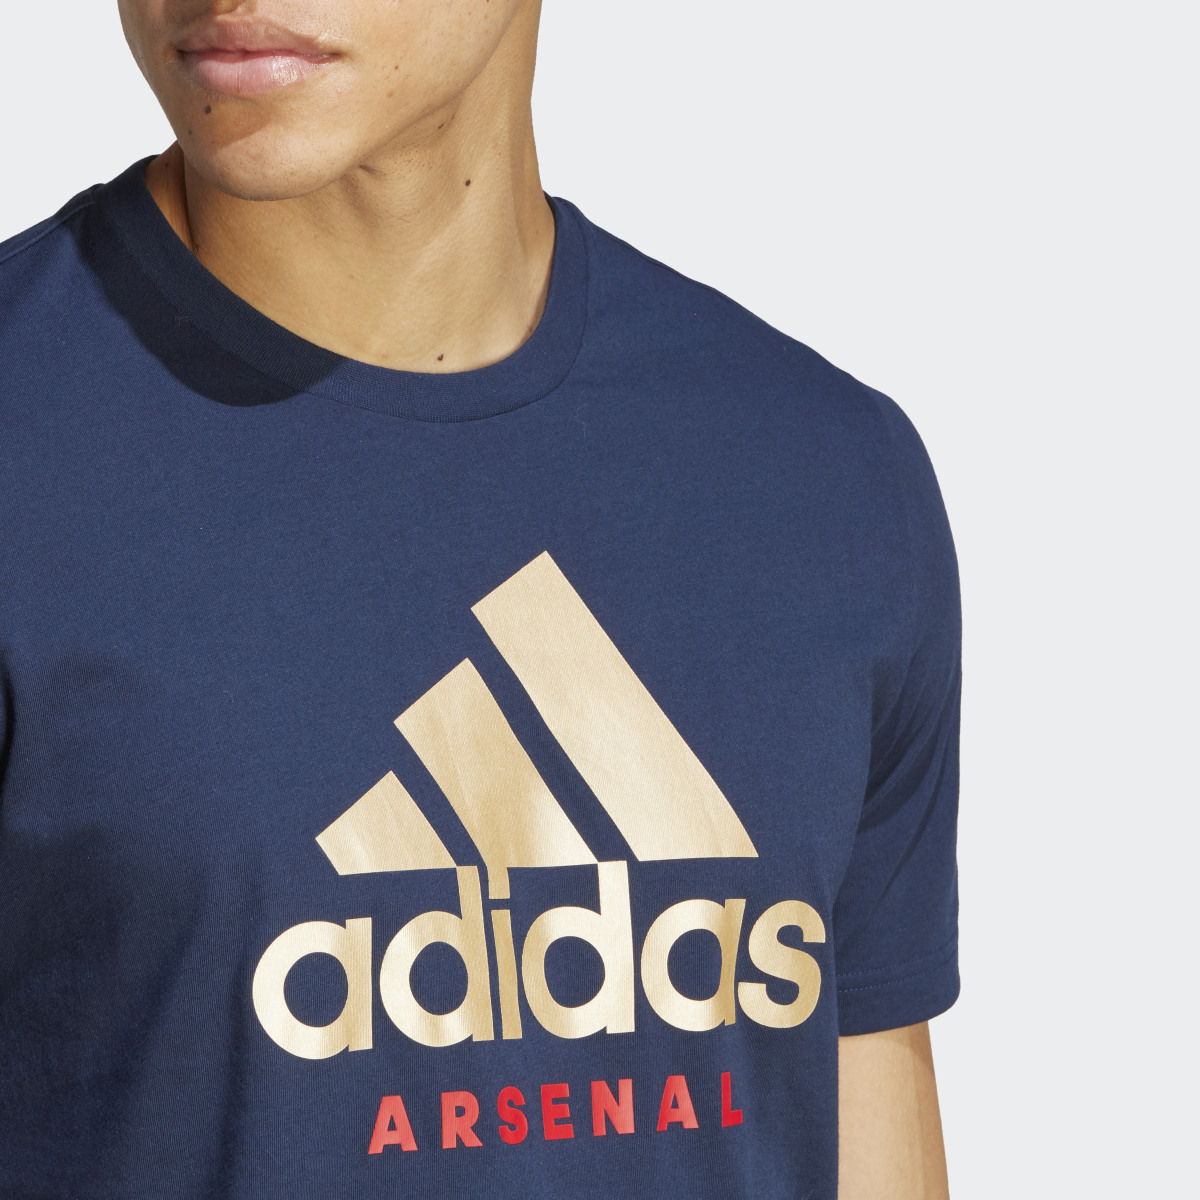 Adidas T-shirt Arsenal Street Graphic. 6